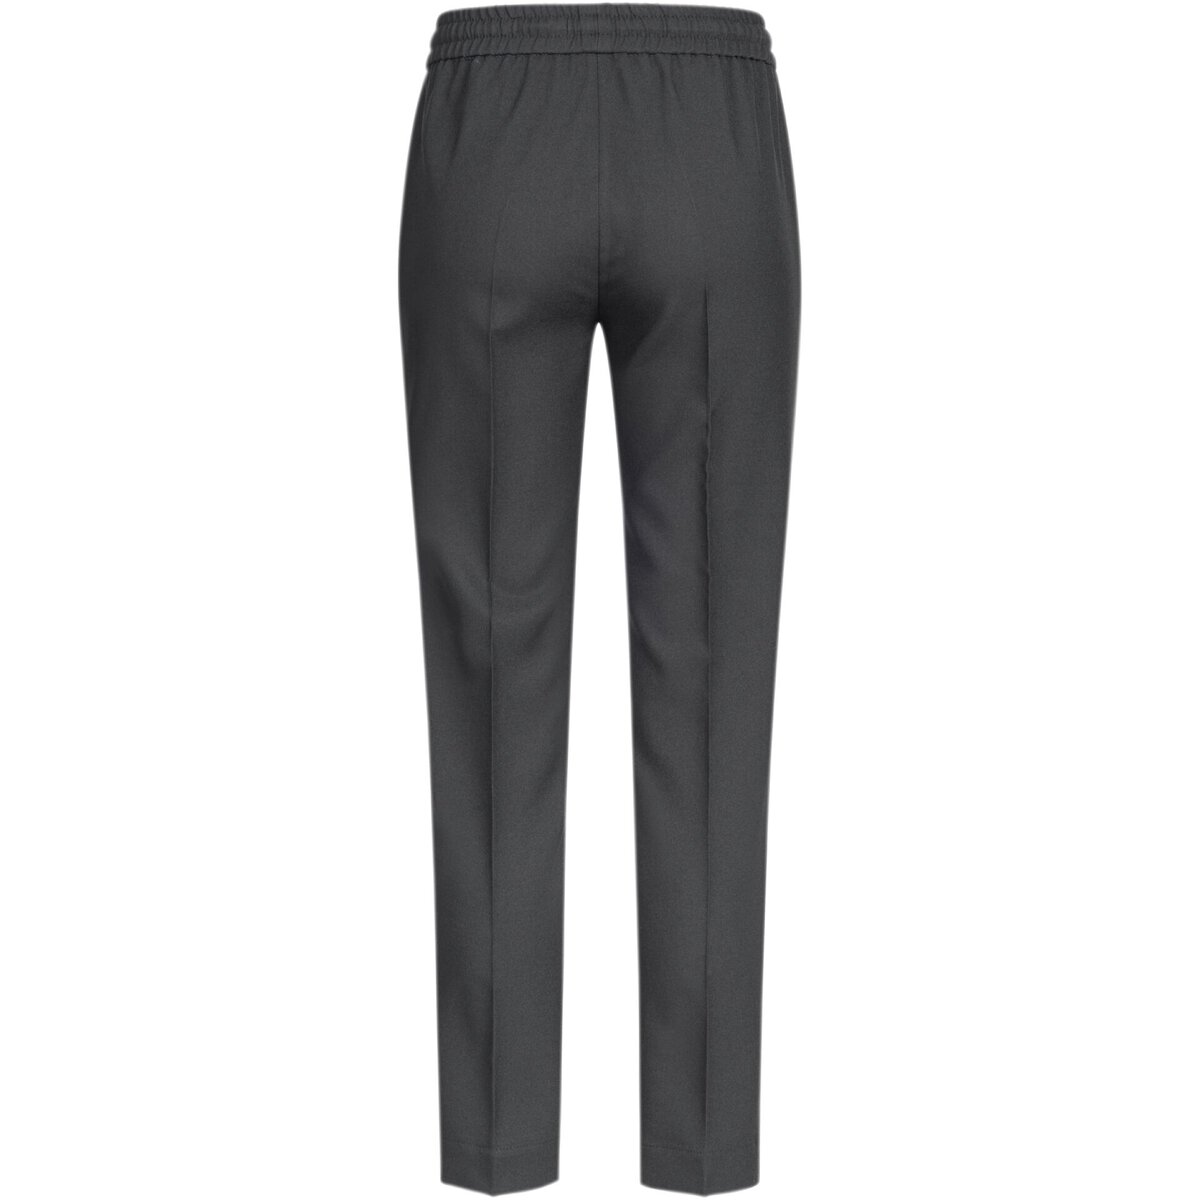 Damen-Hose "Joggpants" schwarz Größe 40 (1)